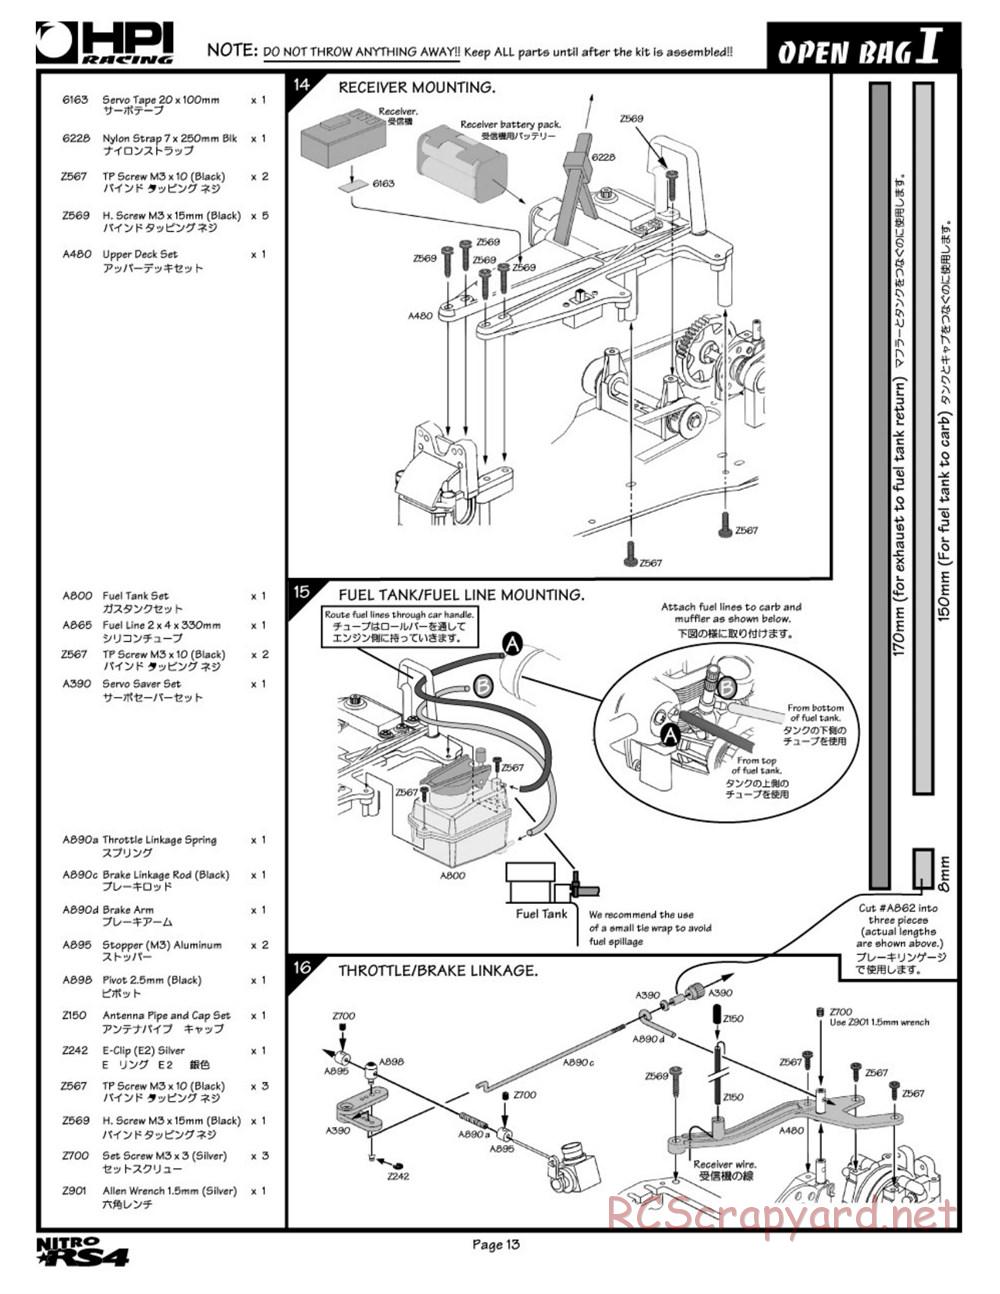 HPI - Nitro RS4 - Manual - Page 13